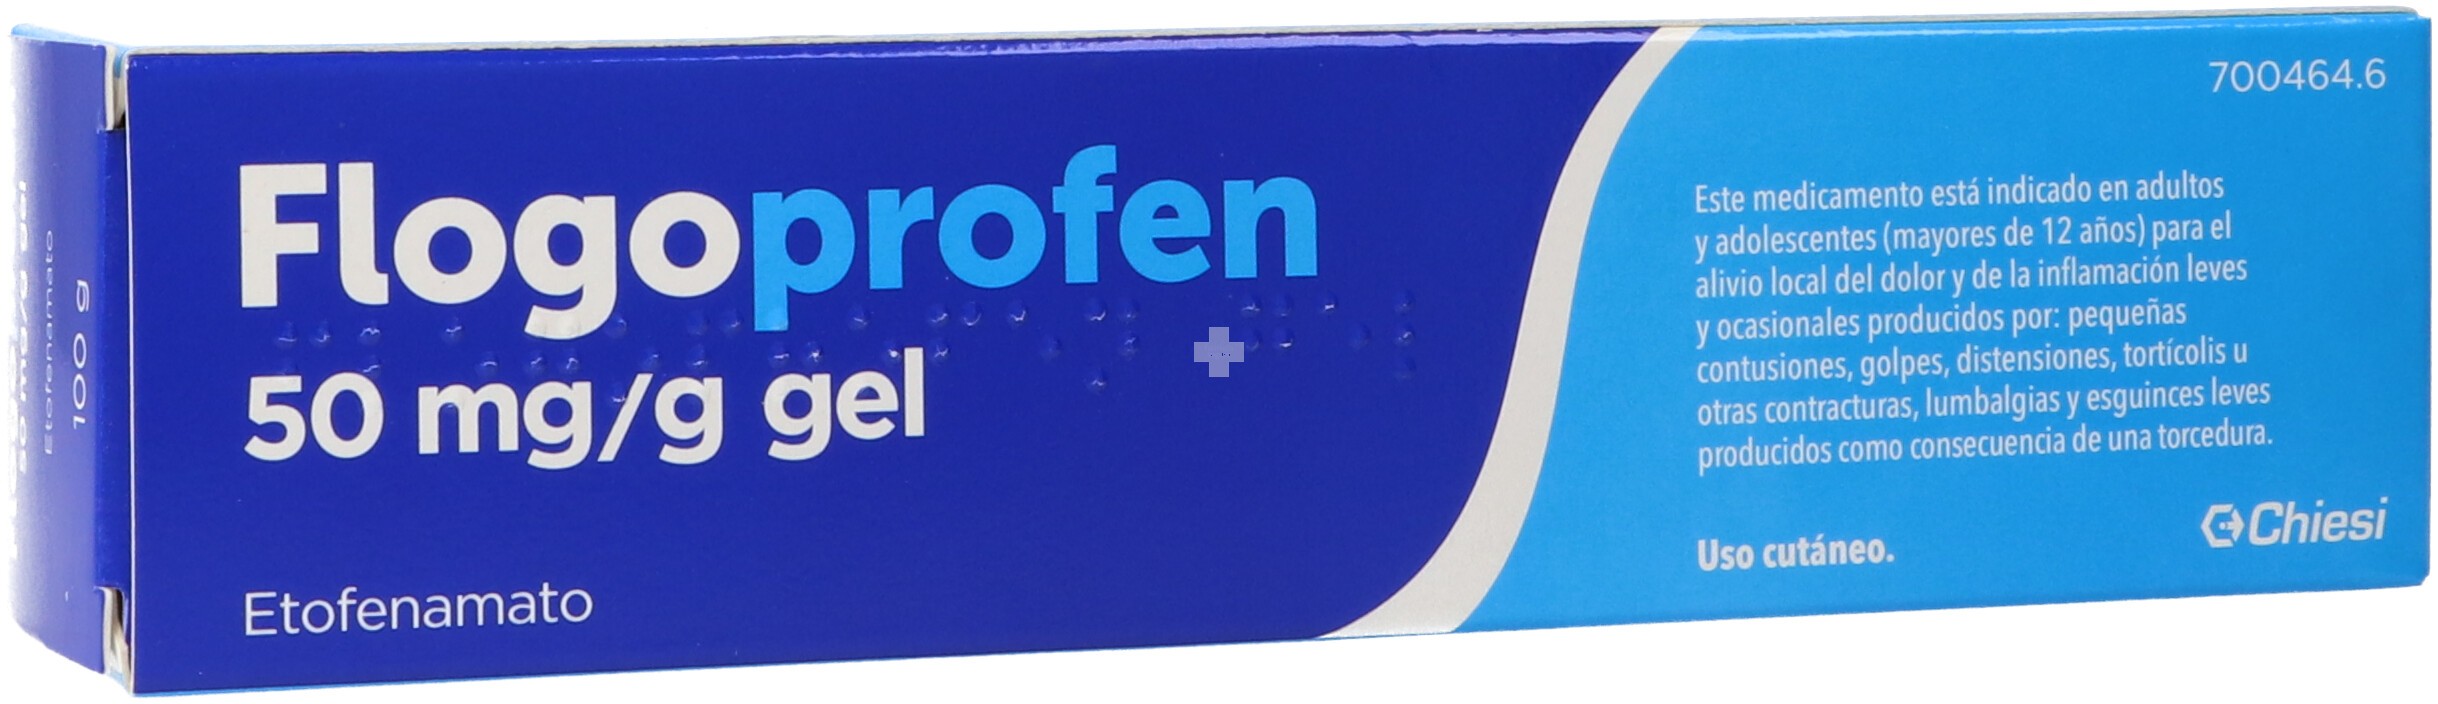 Flogoprofen 50 mg/G gel - 1 Tubo De 100 g